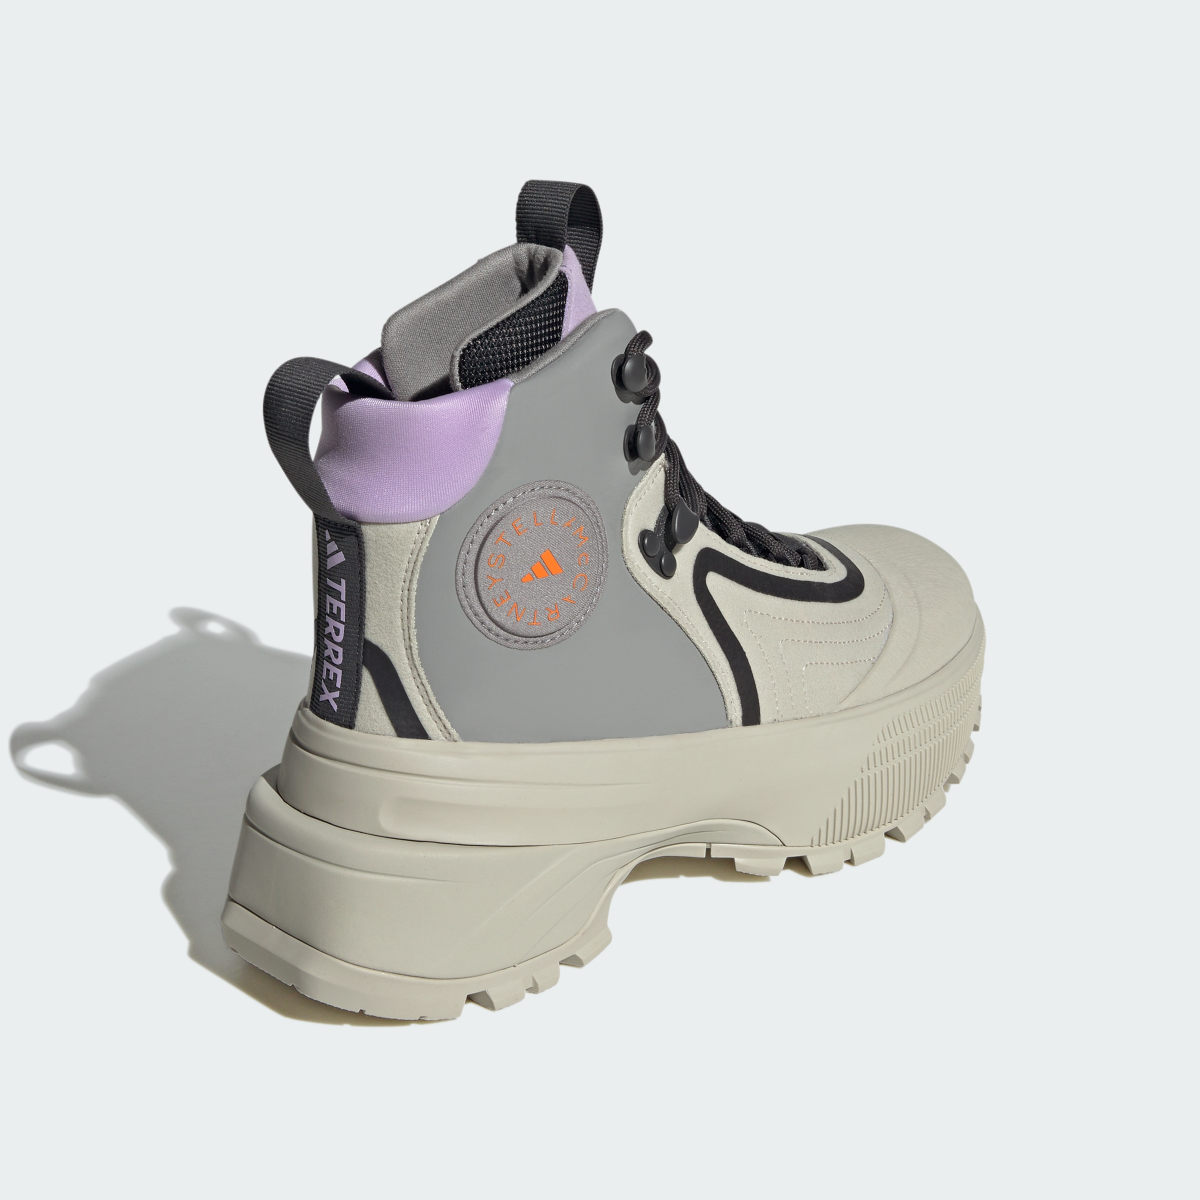 Adidas by Stella McCartney x Terrex Hiking Boots. 11